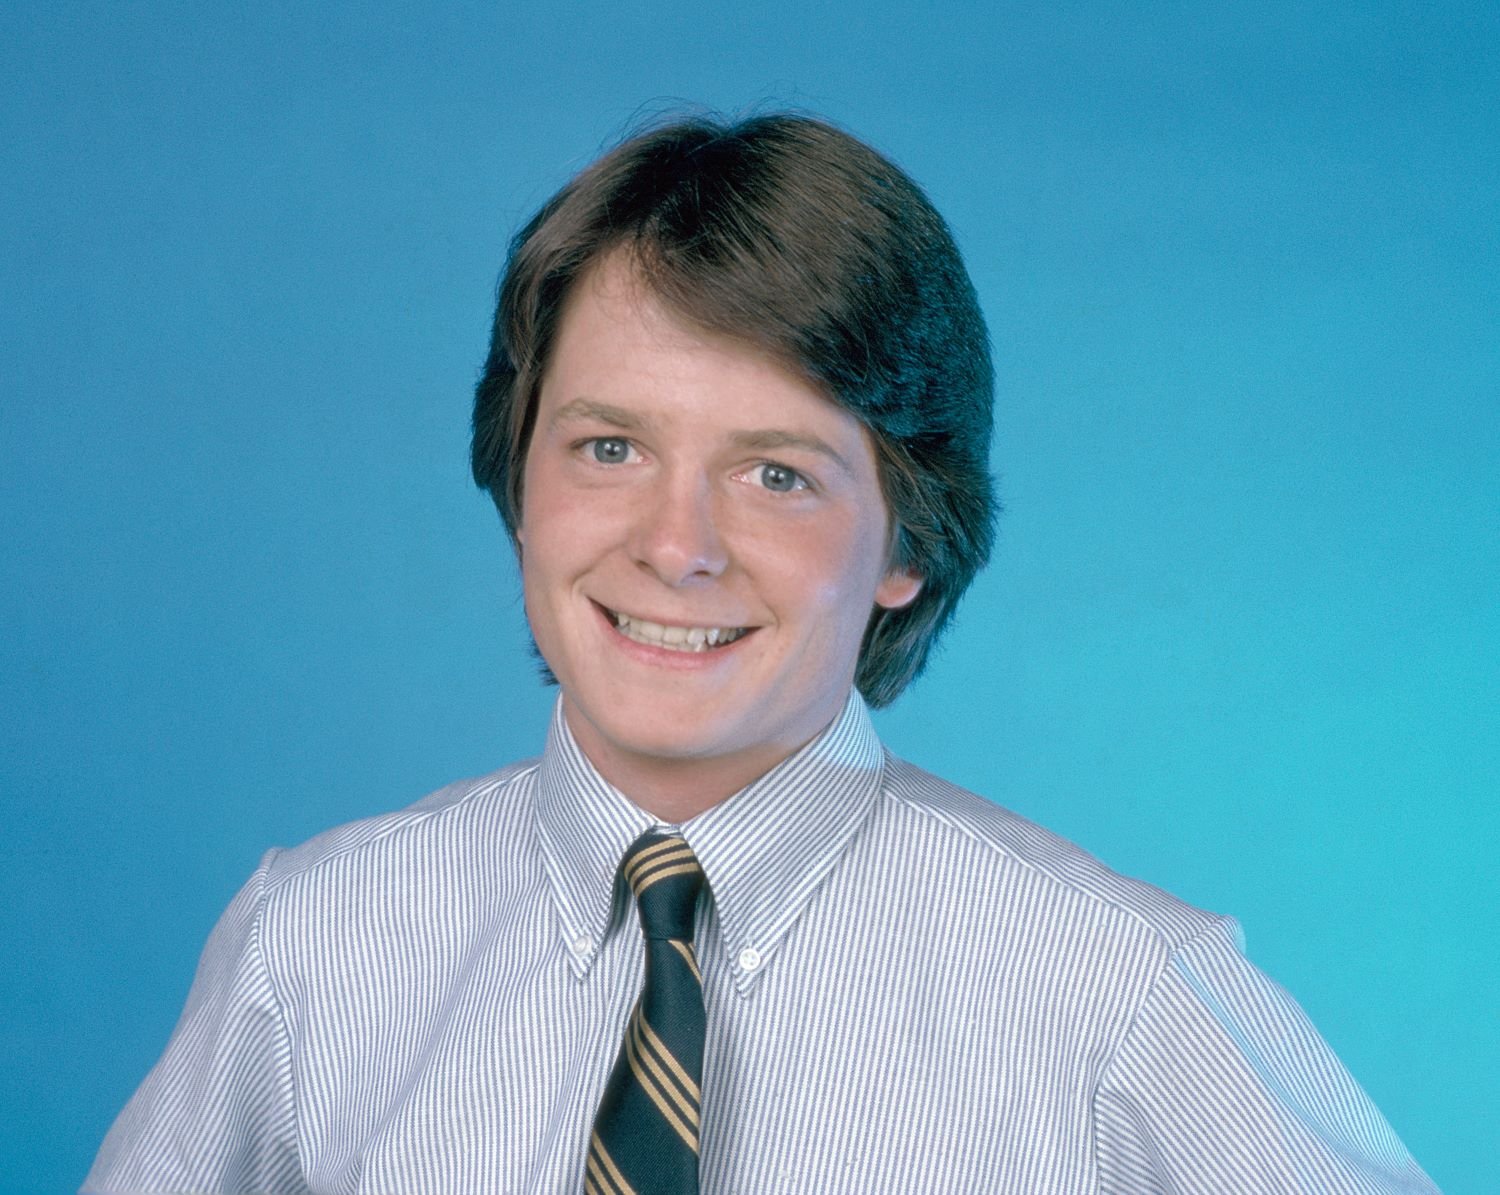 Michael J. Fox in 'Family Ties'